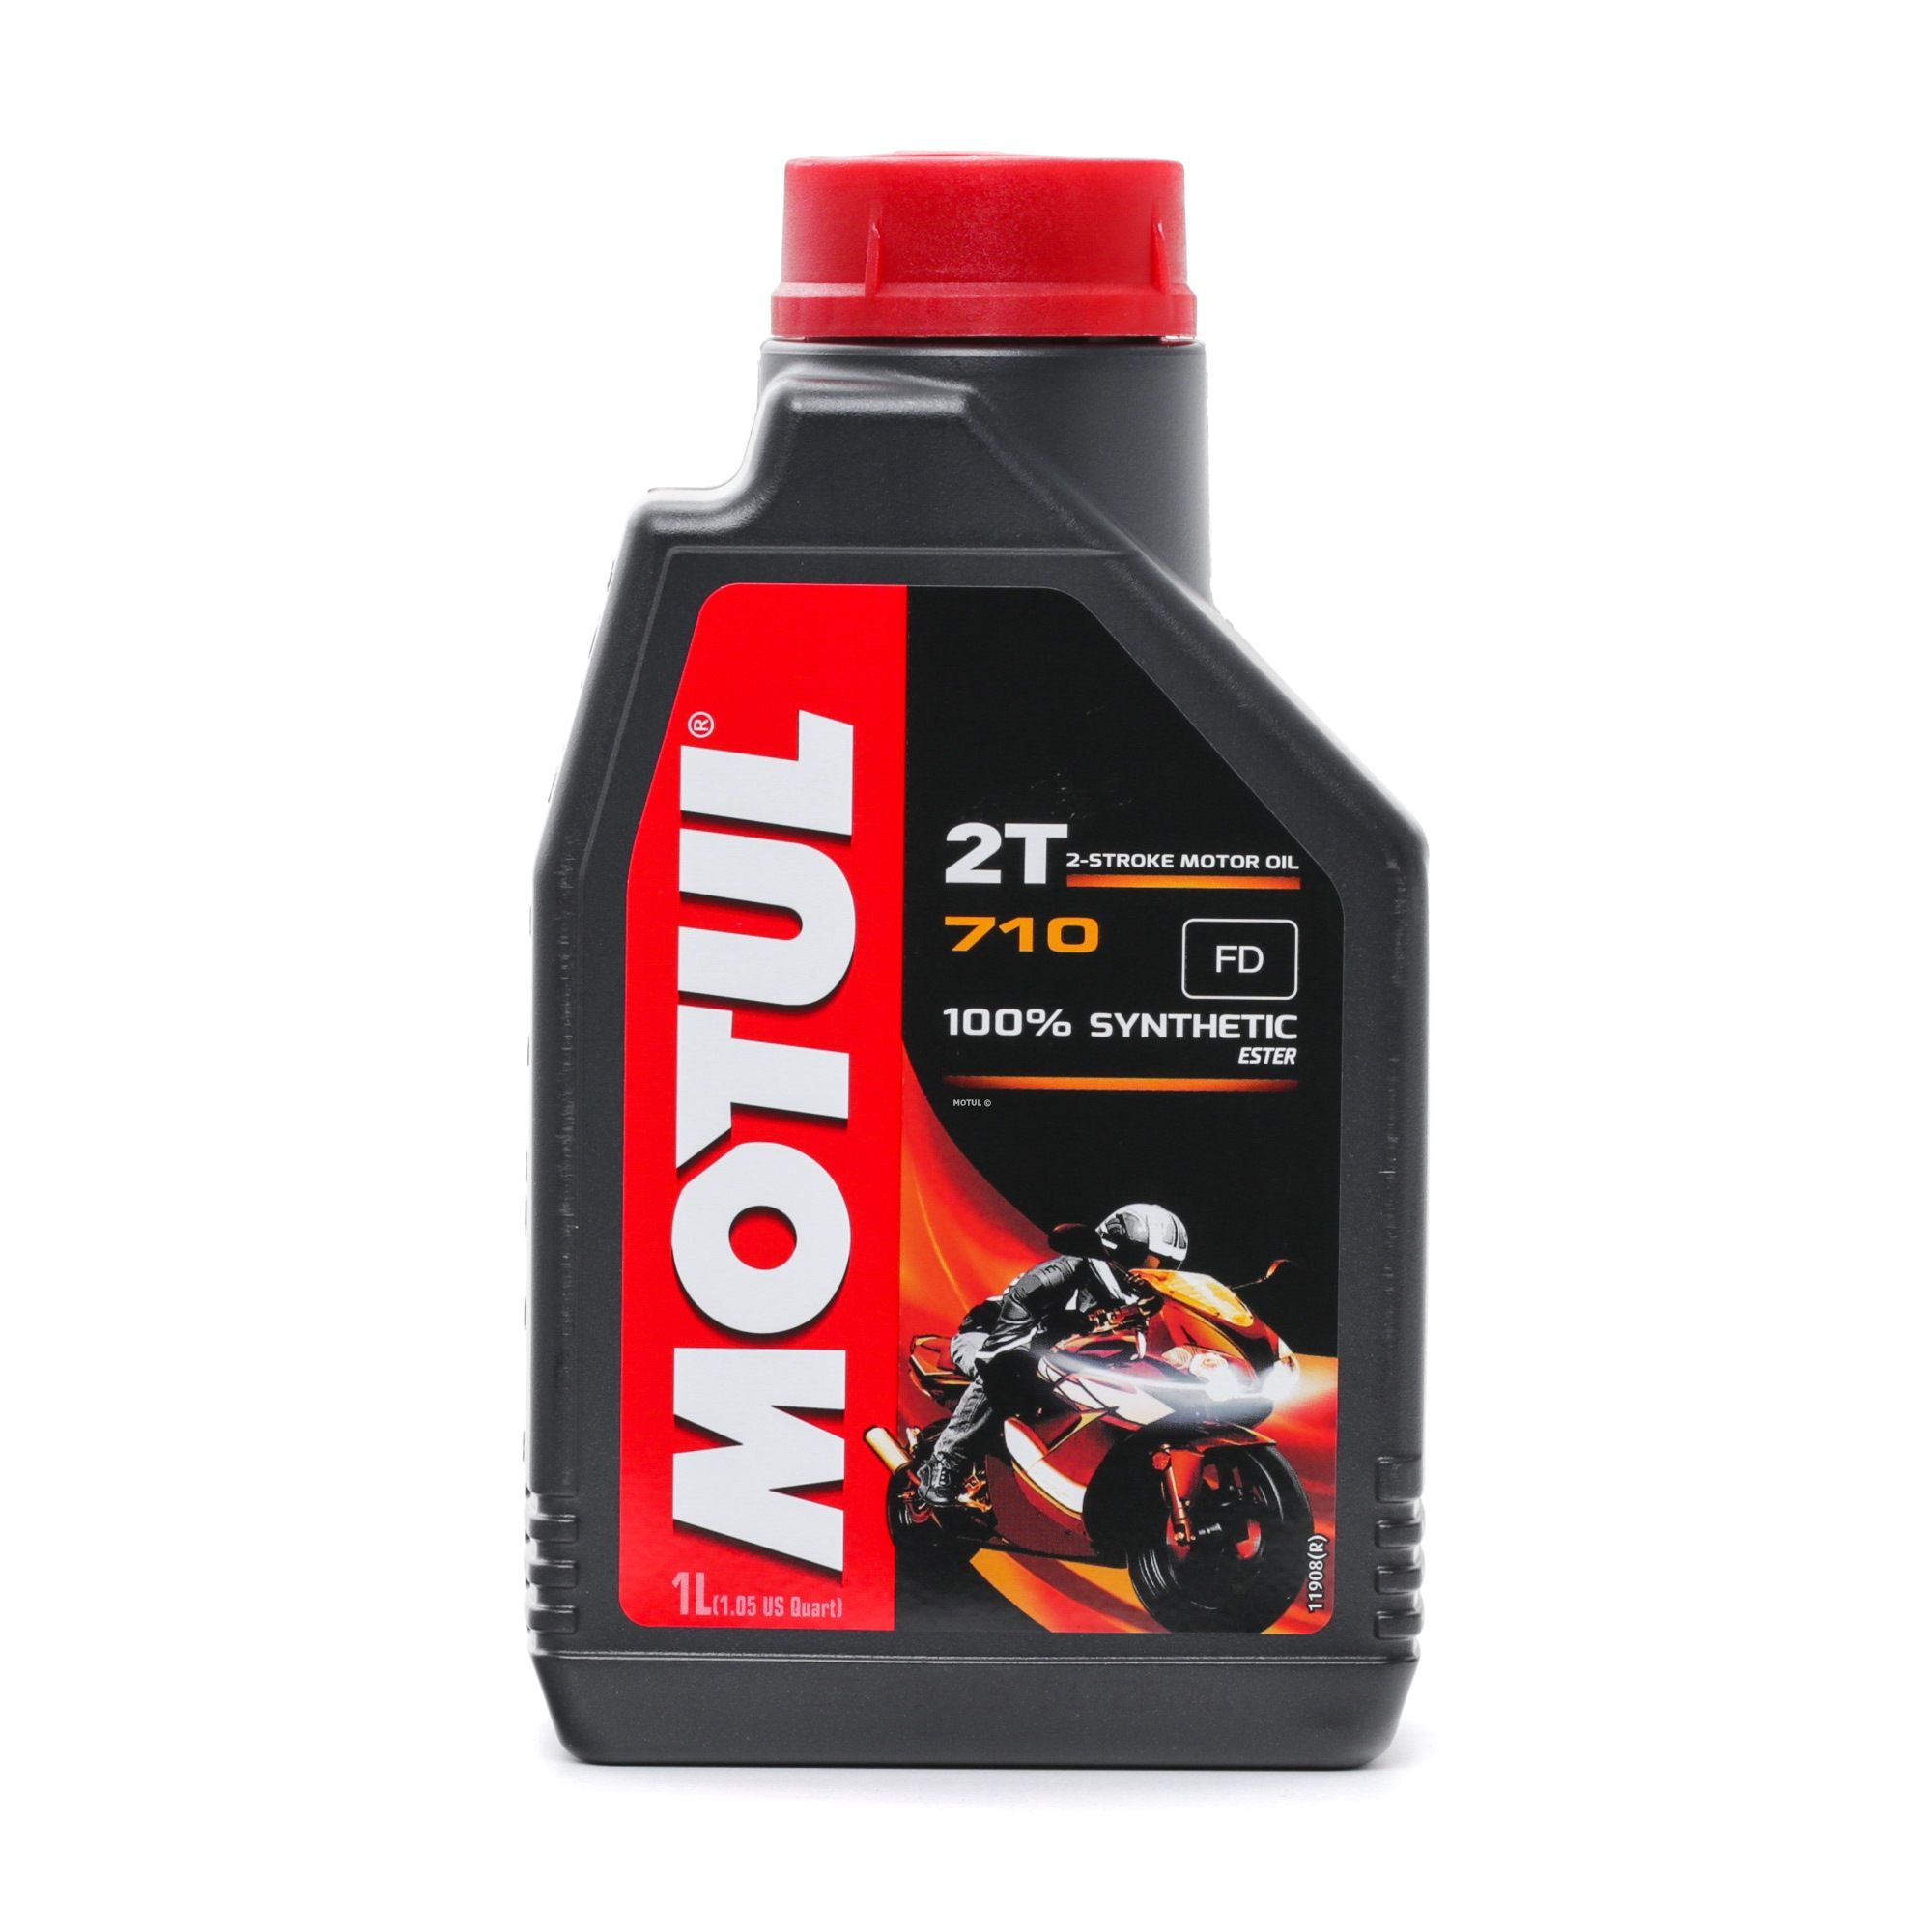 Maxi skútry Mopedy Motocykl Motorový olej 104034